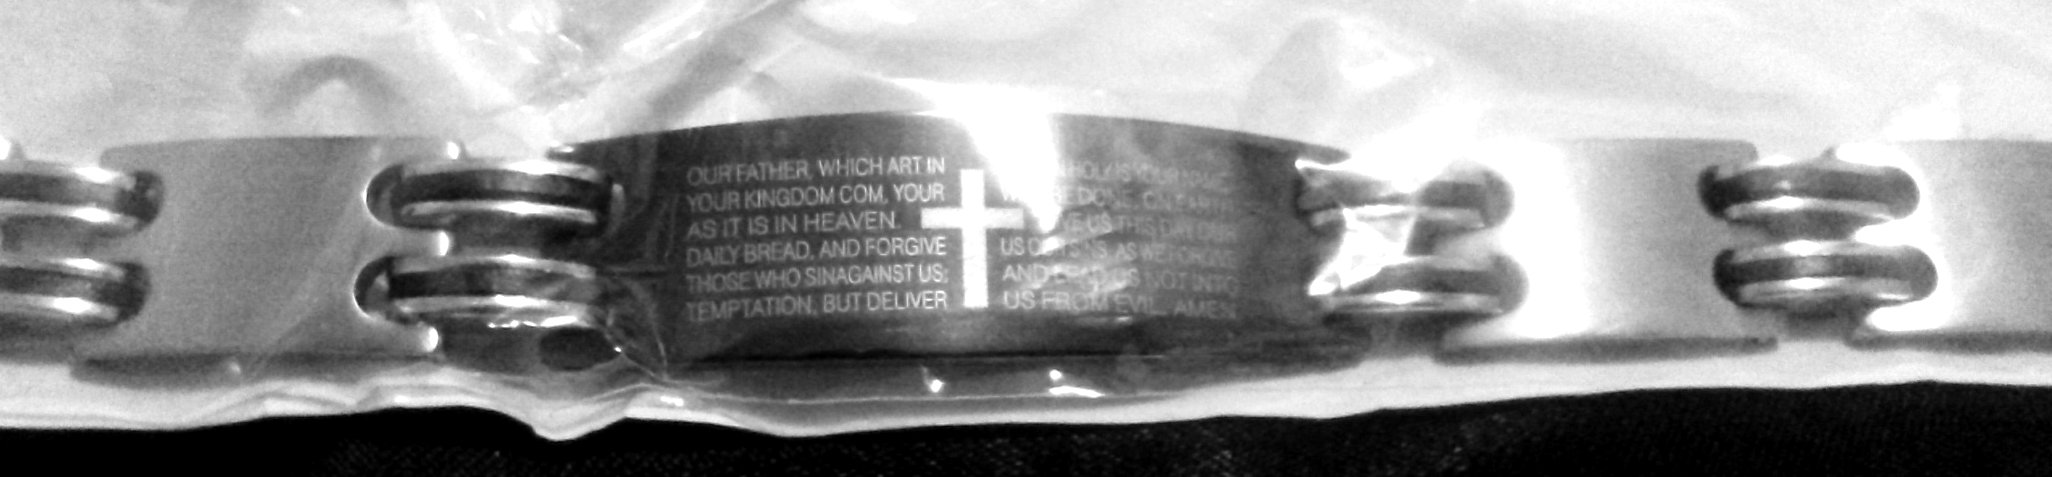 Lord\'s Prayer Mens bracelet